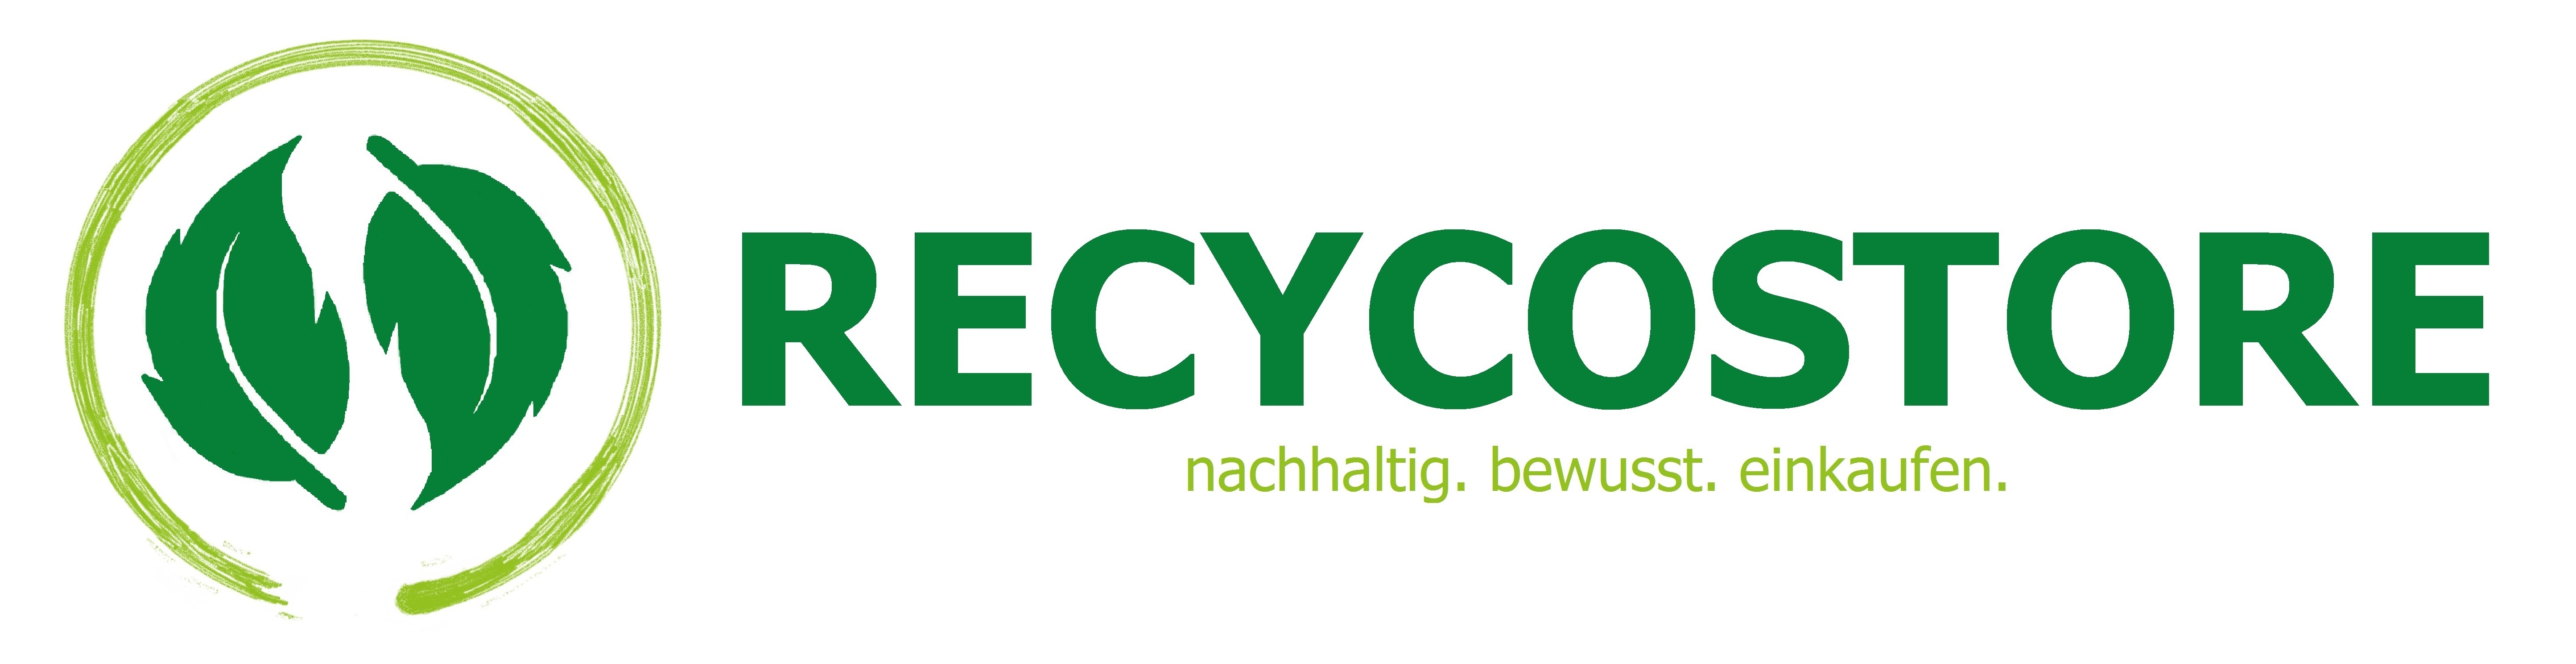 recycostore